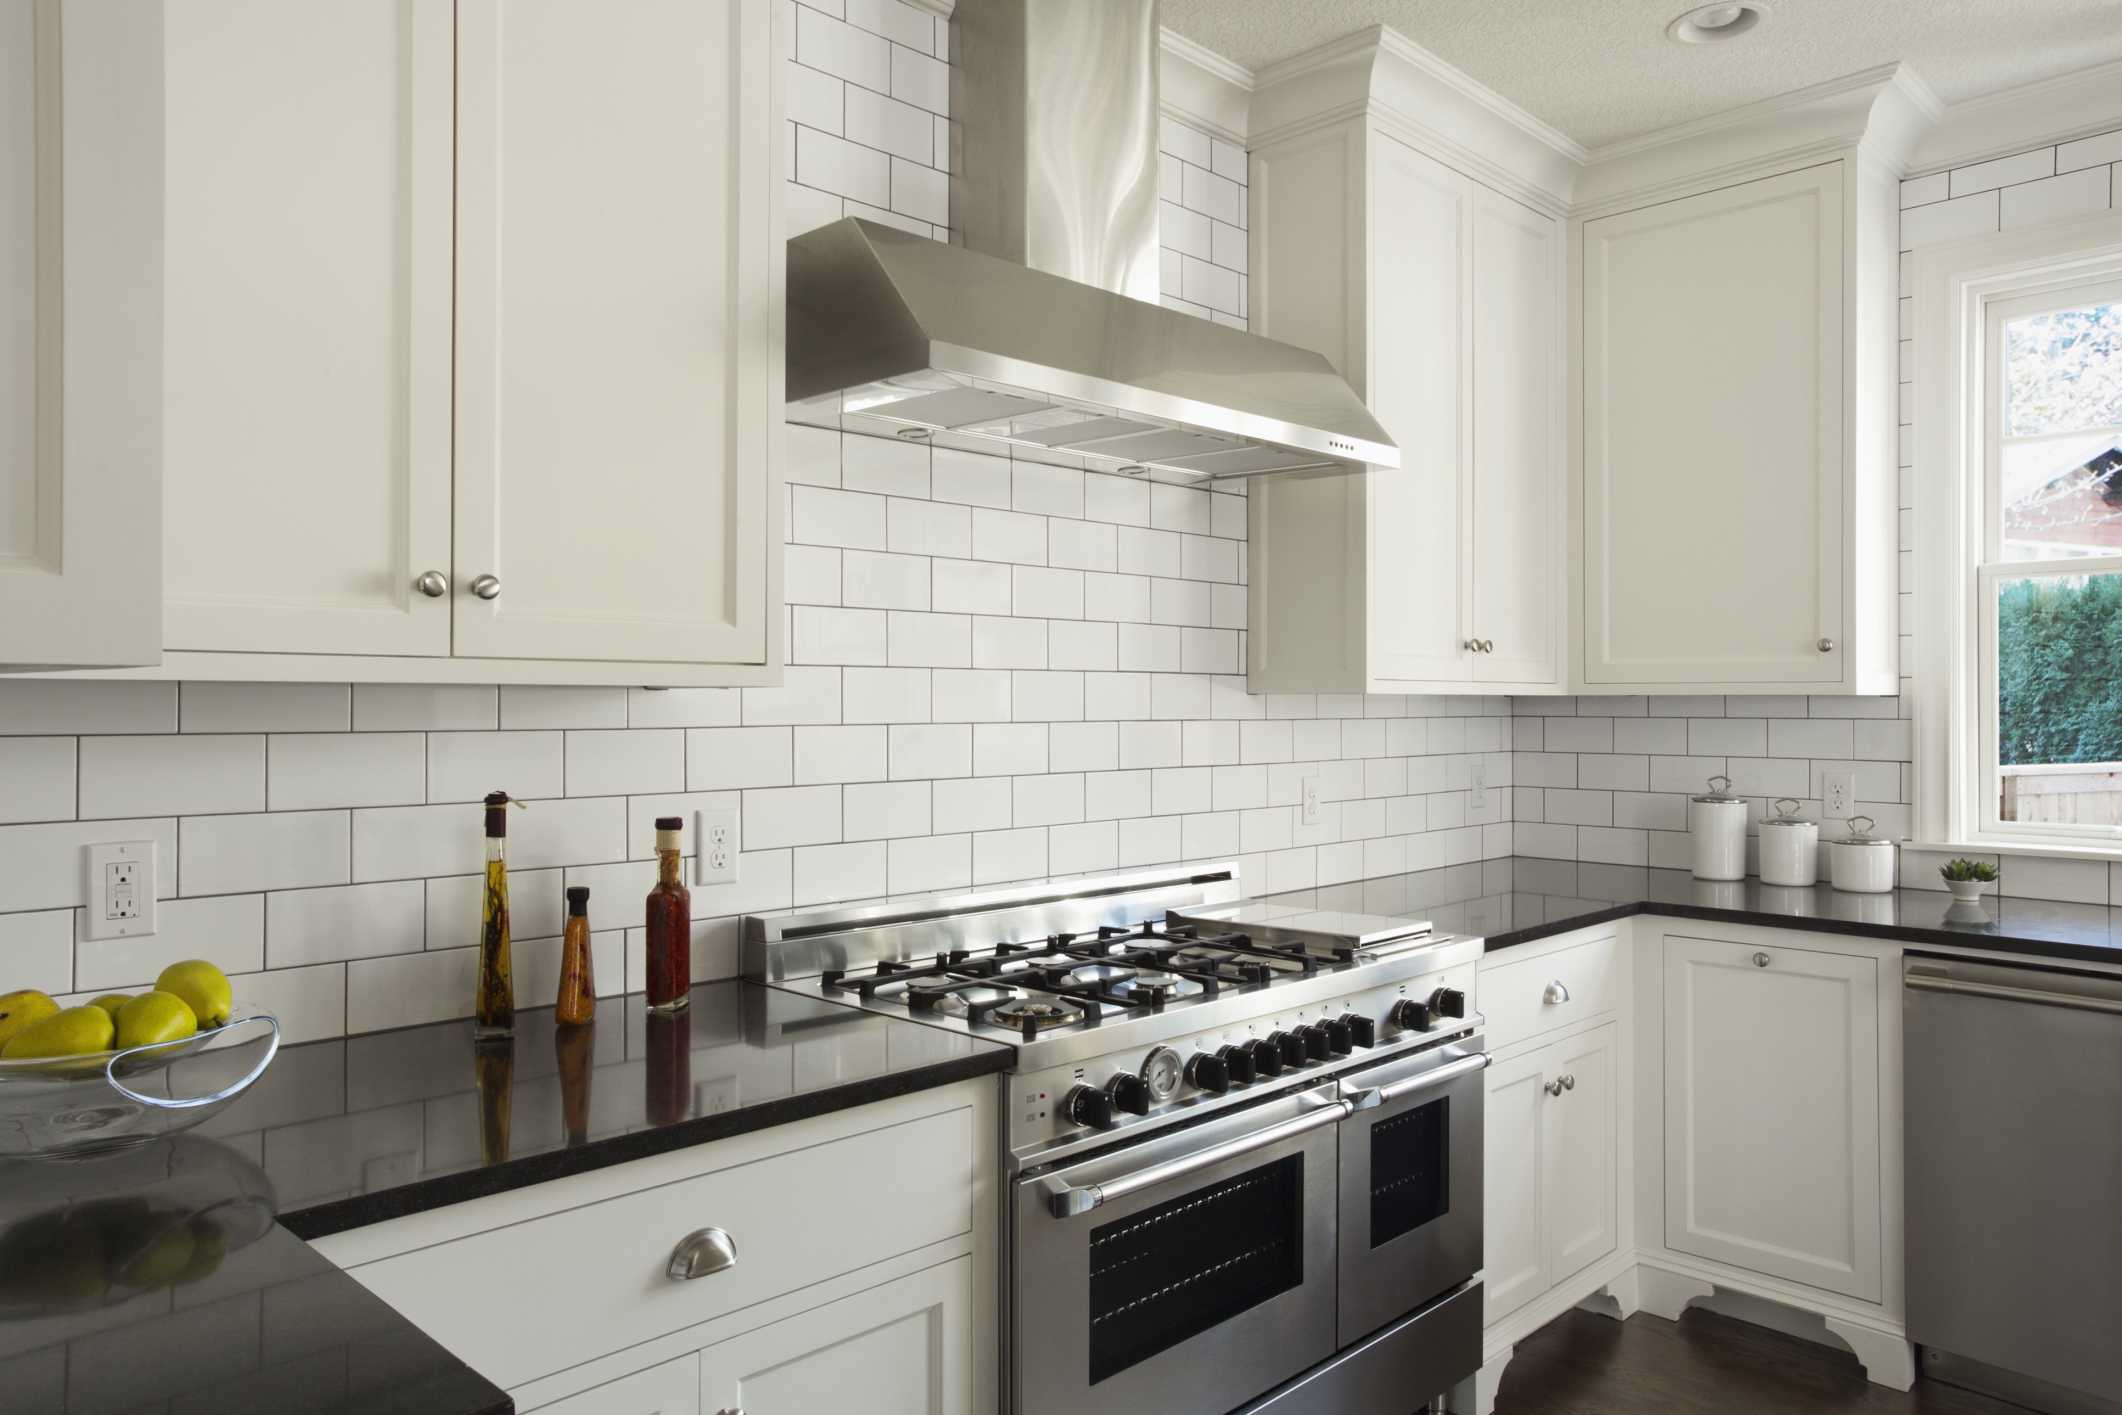 Herringbone Subway Tile Kitchen Backsplash Inspirational How Subway Tile Can Effectively Work In Modern Rooms